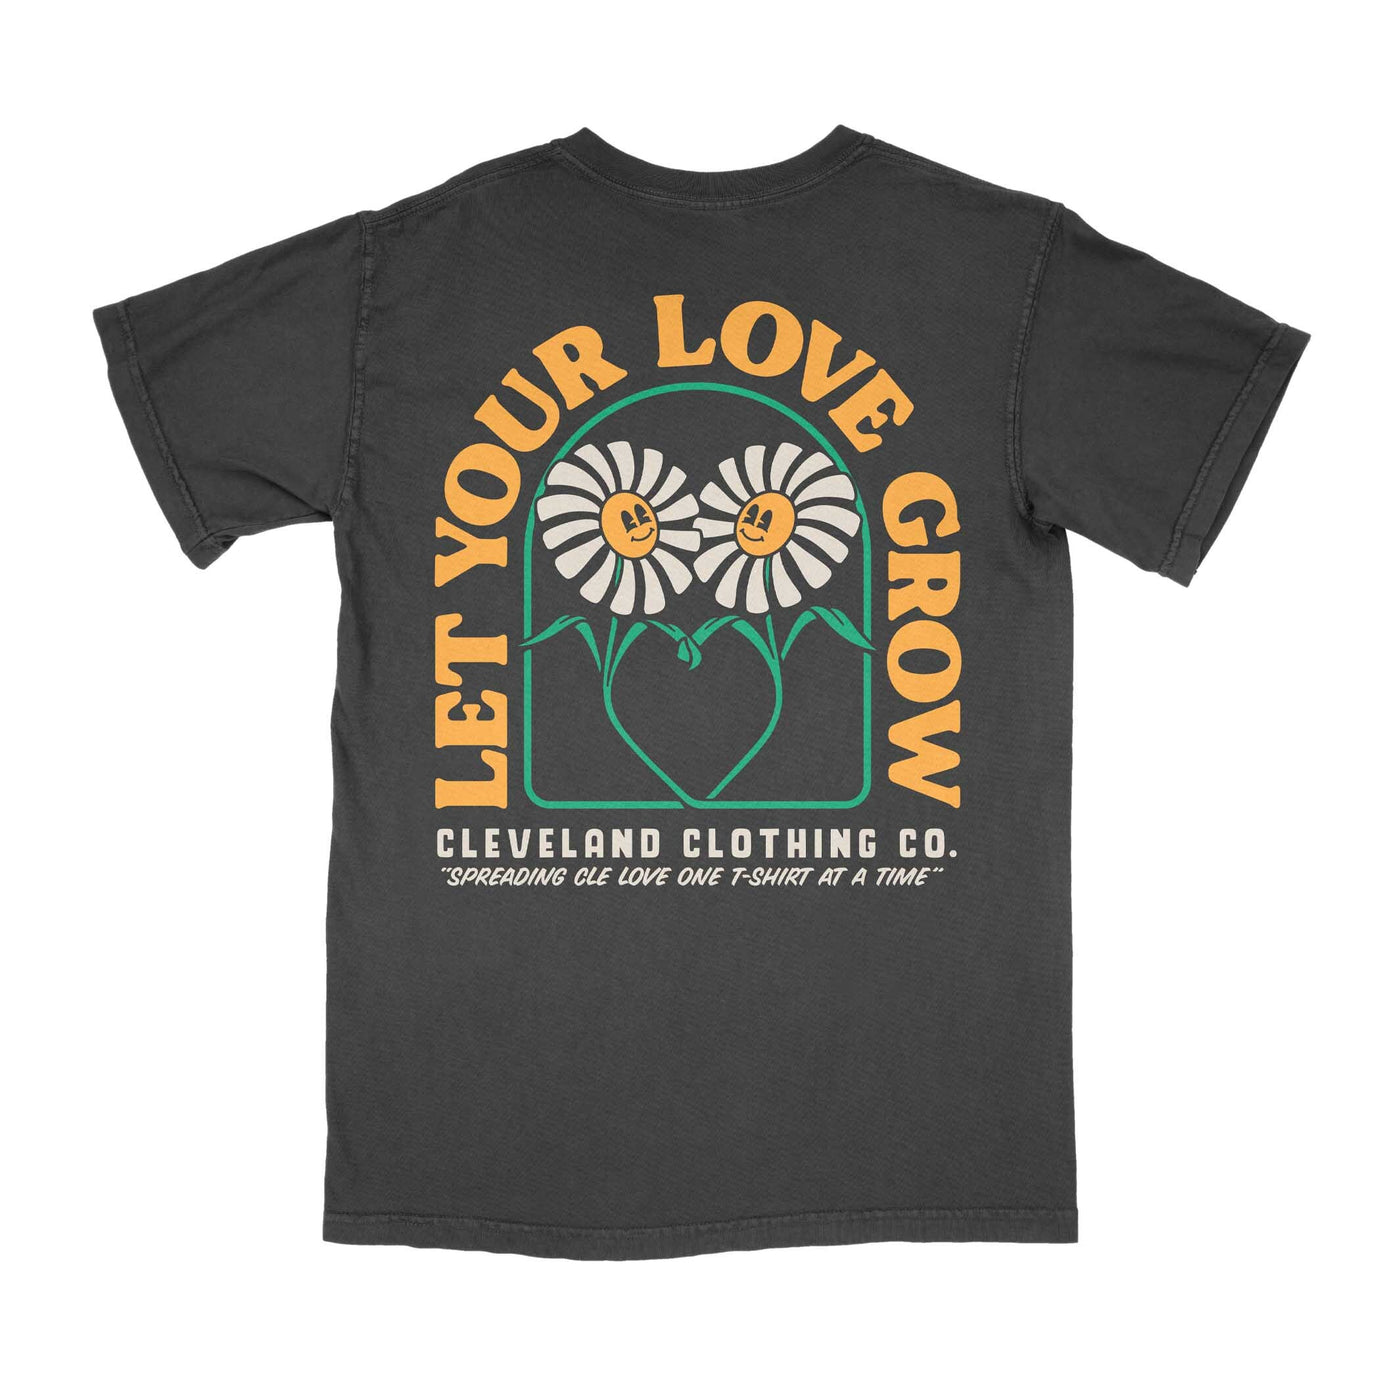 Let Your Love Grow - Unisex Crew T-shirt